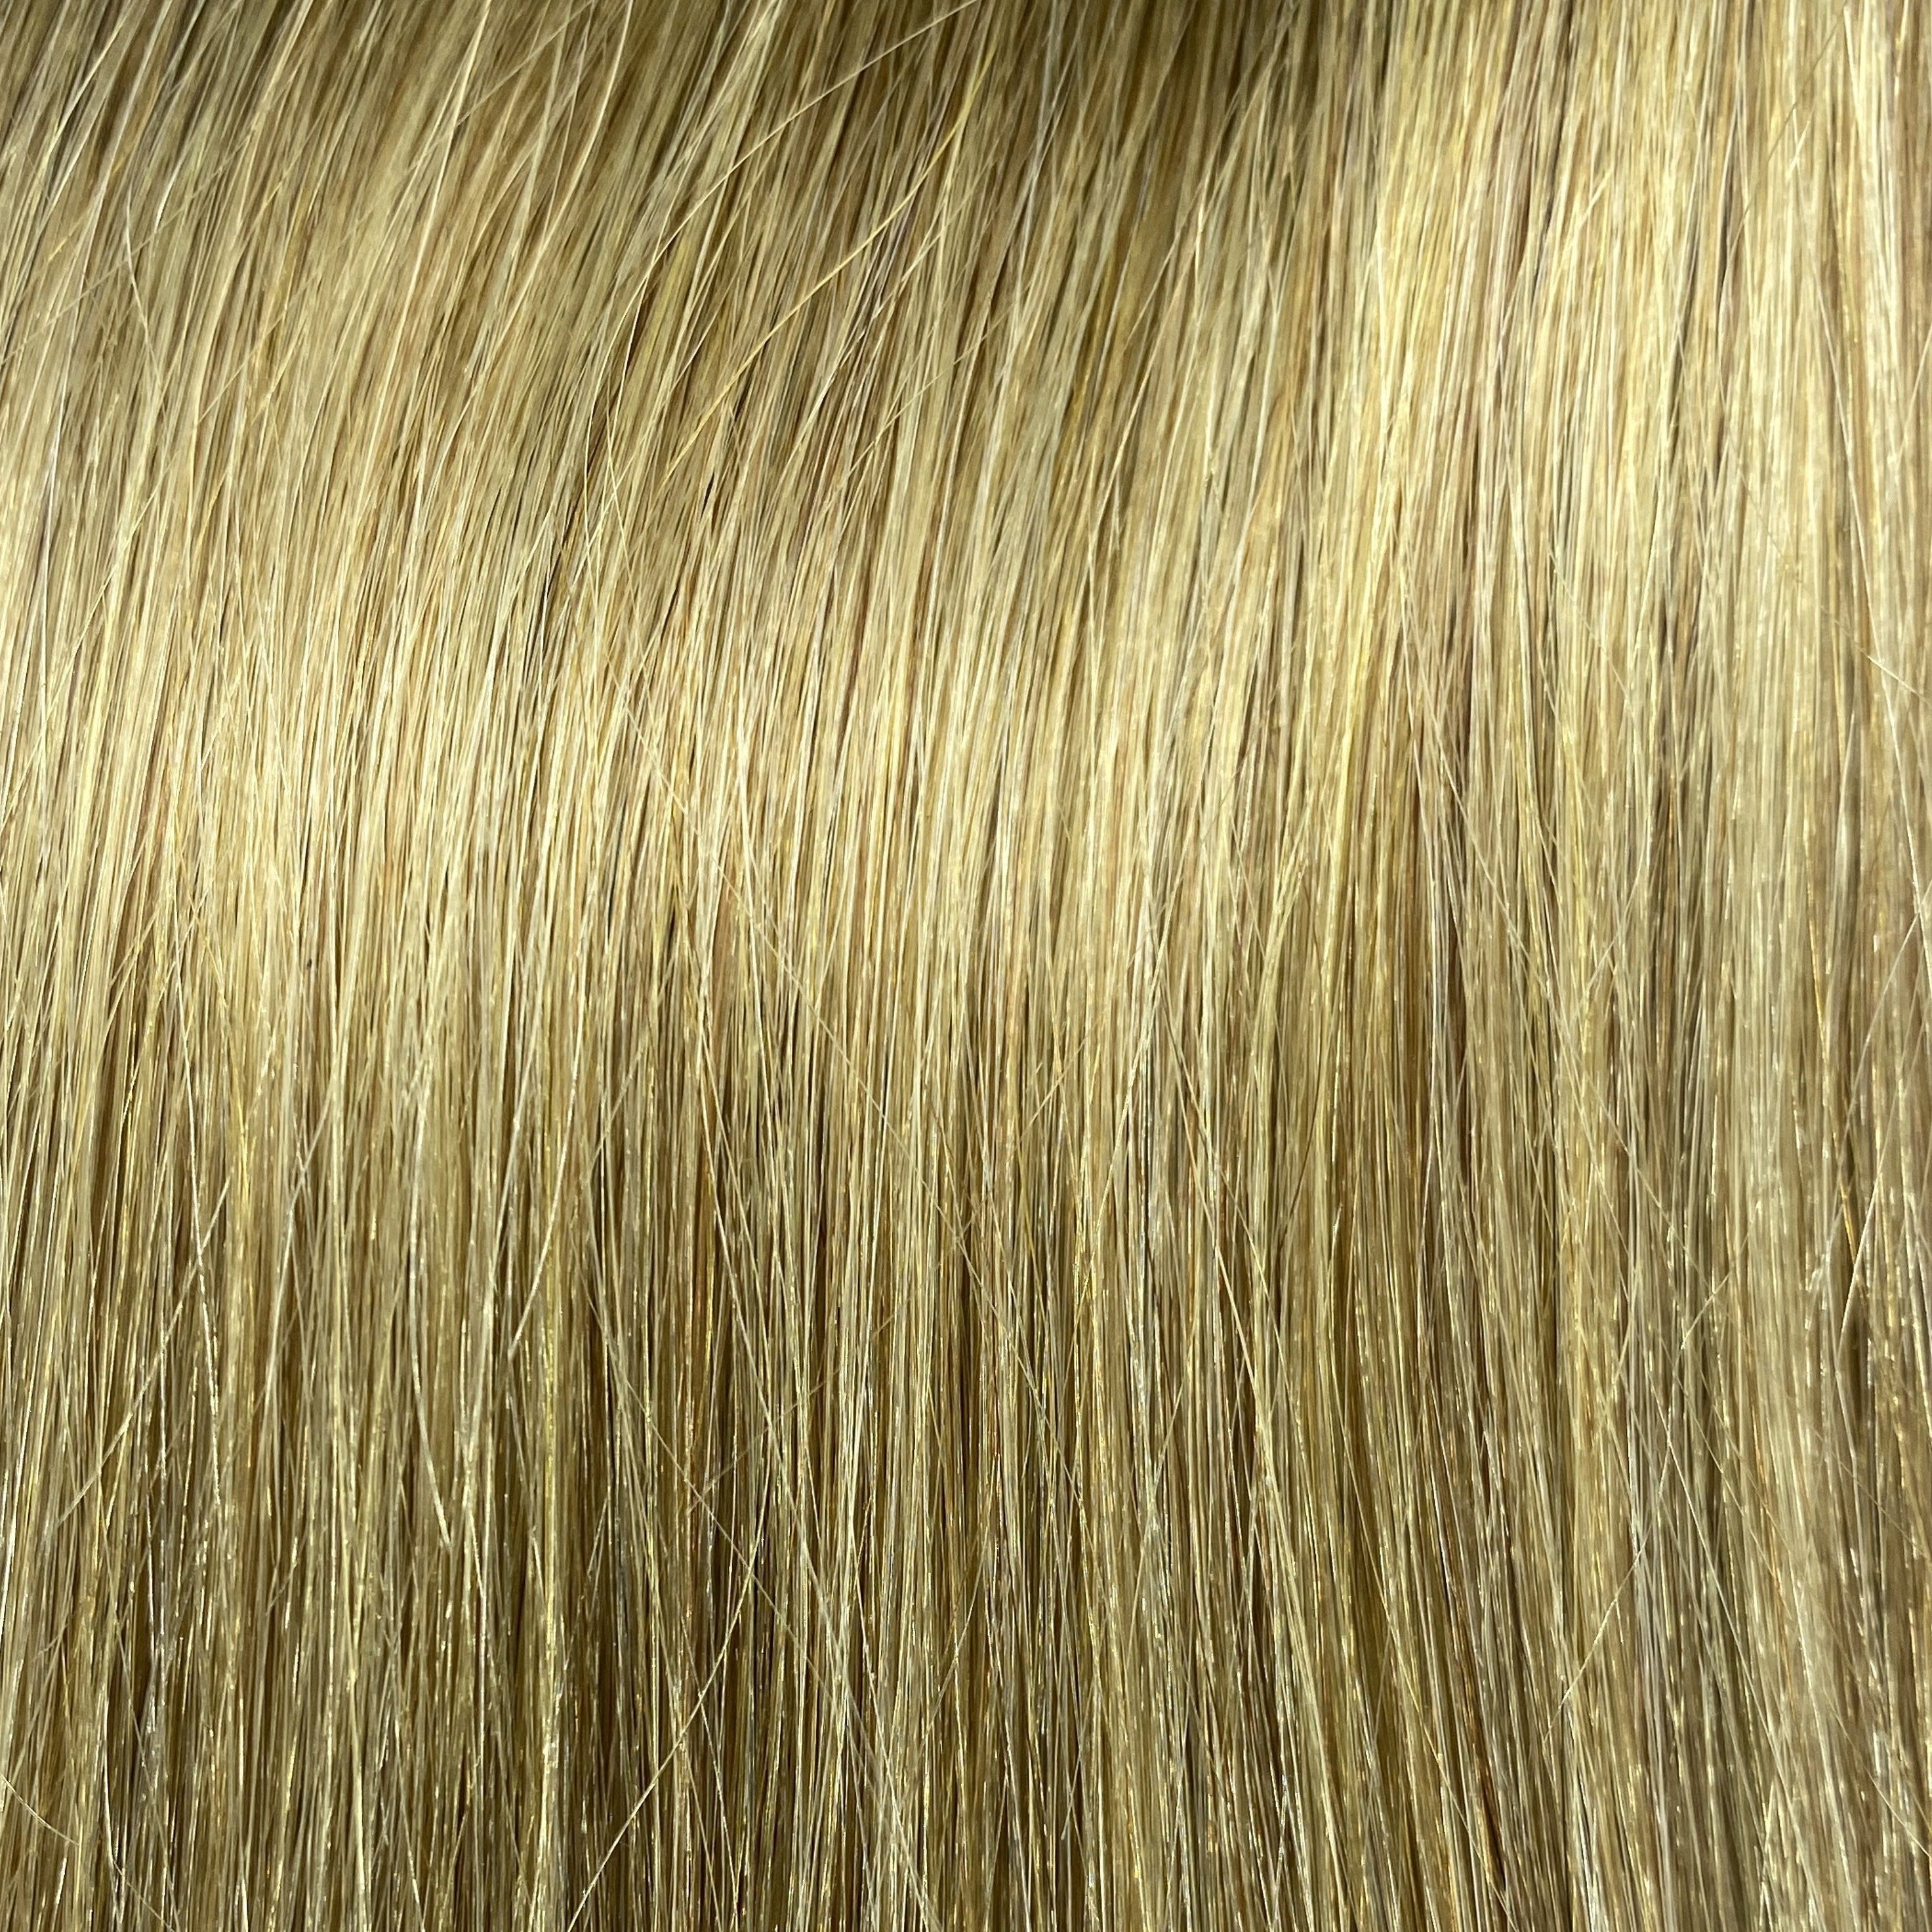 Velo Sale #4&10 - 20 inches - Light Chestnut into Dark Blonde Ombre